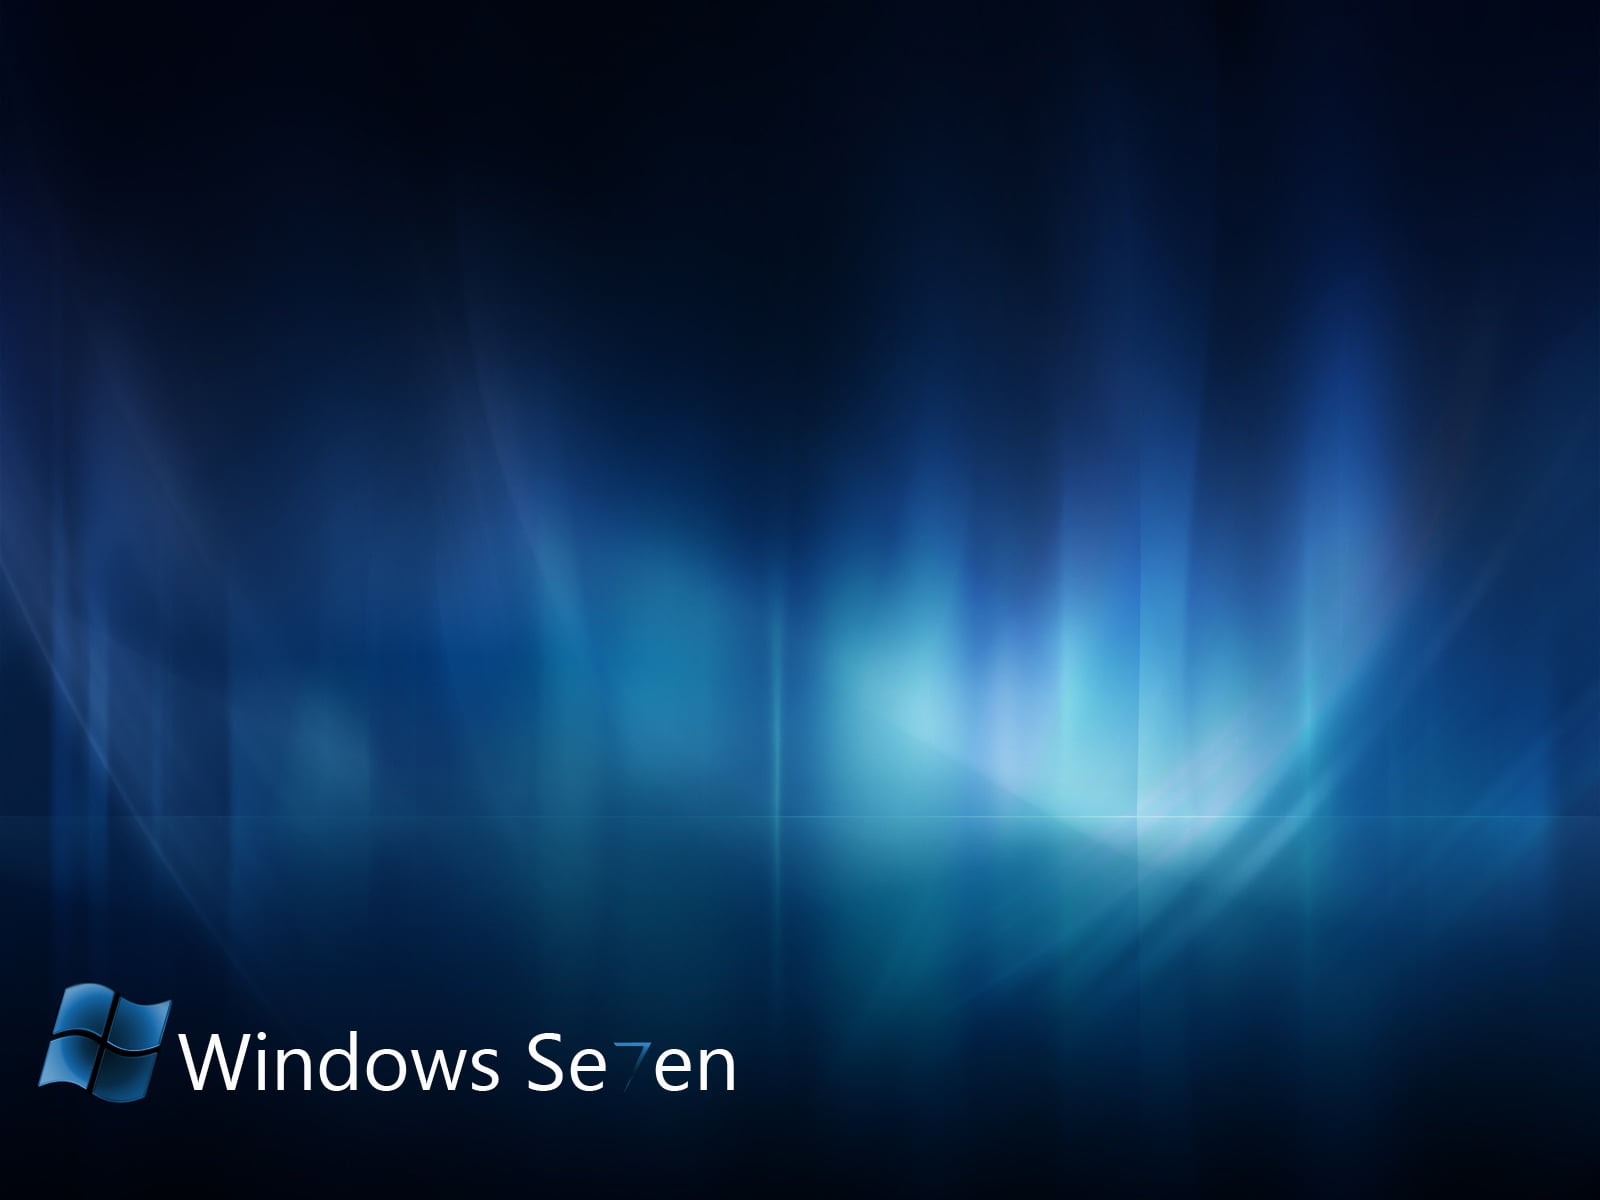 Windows Seven Wallpaper HD